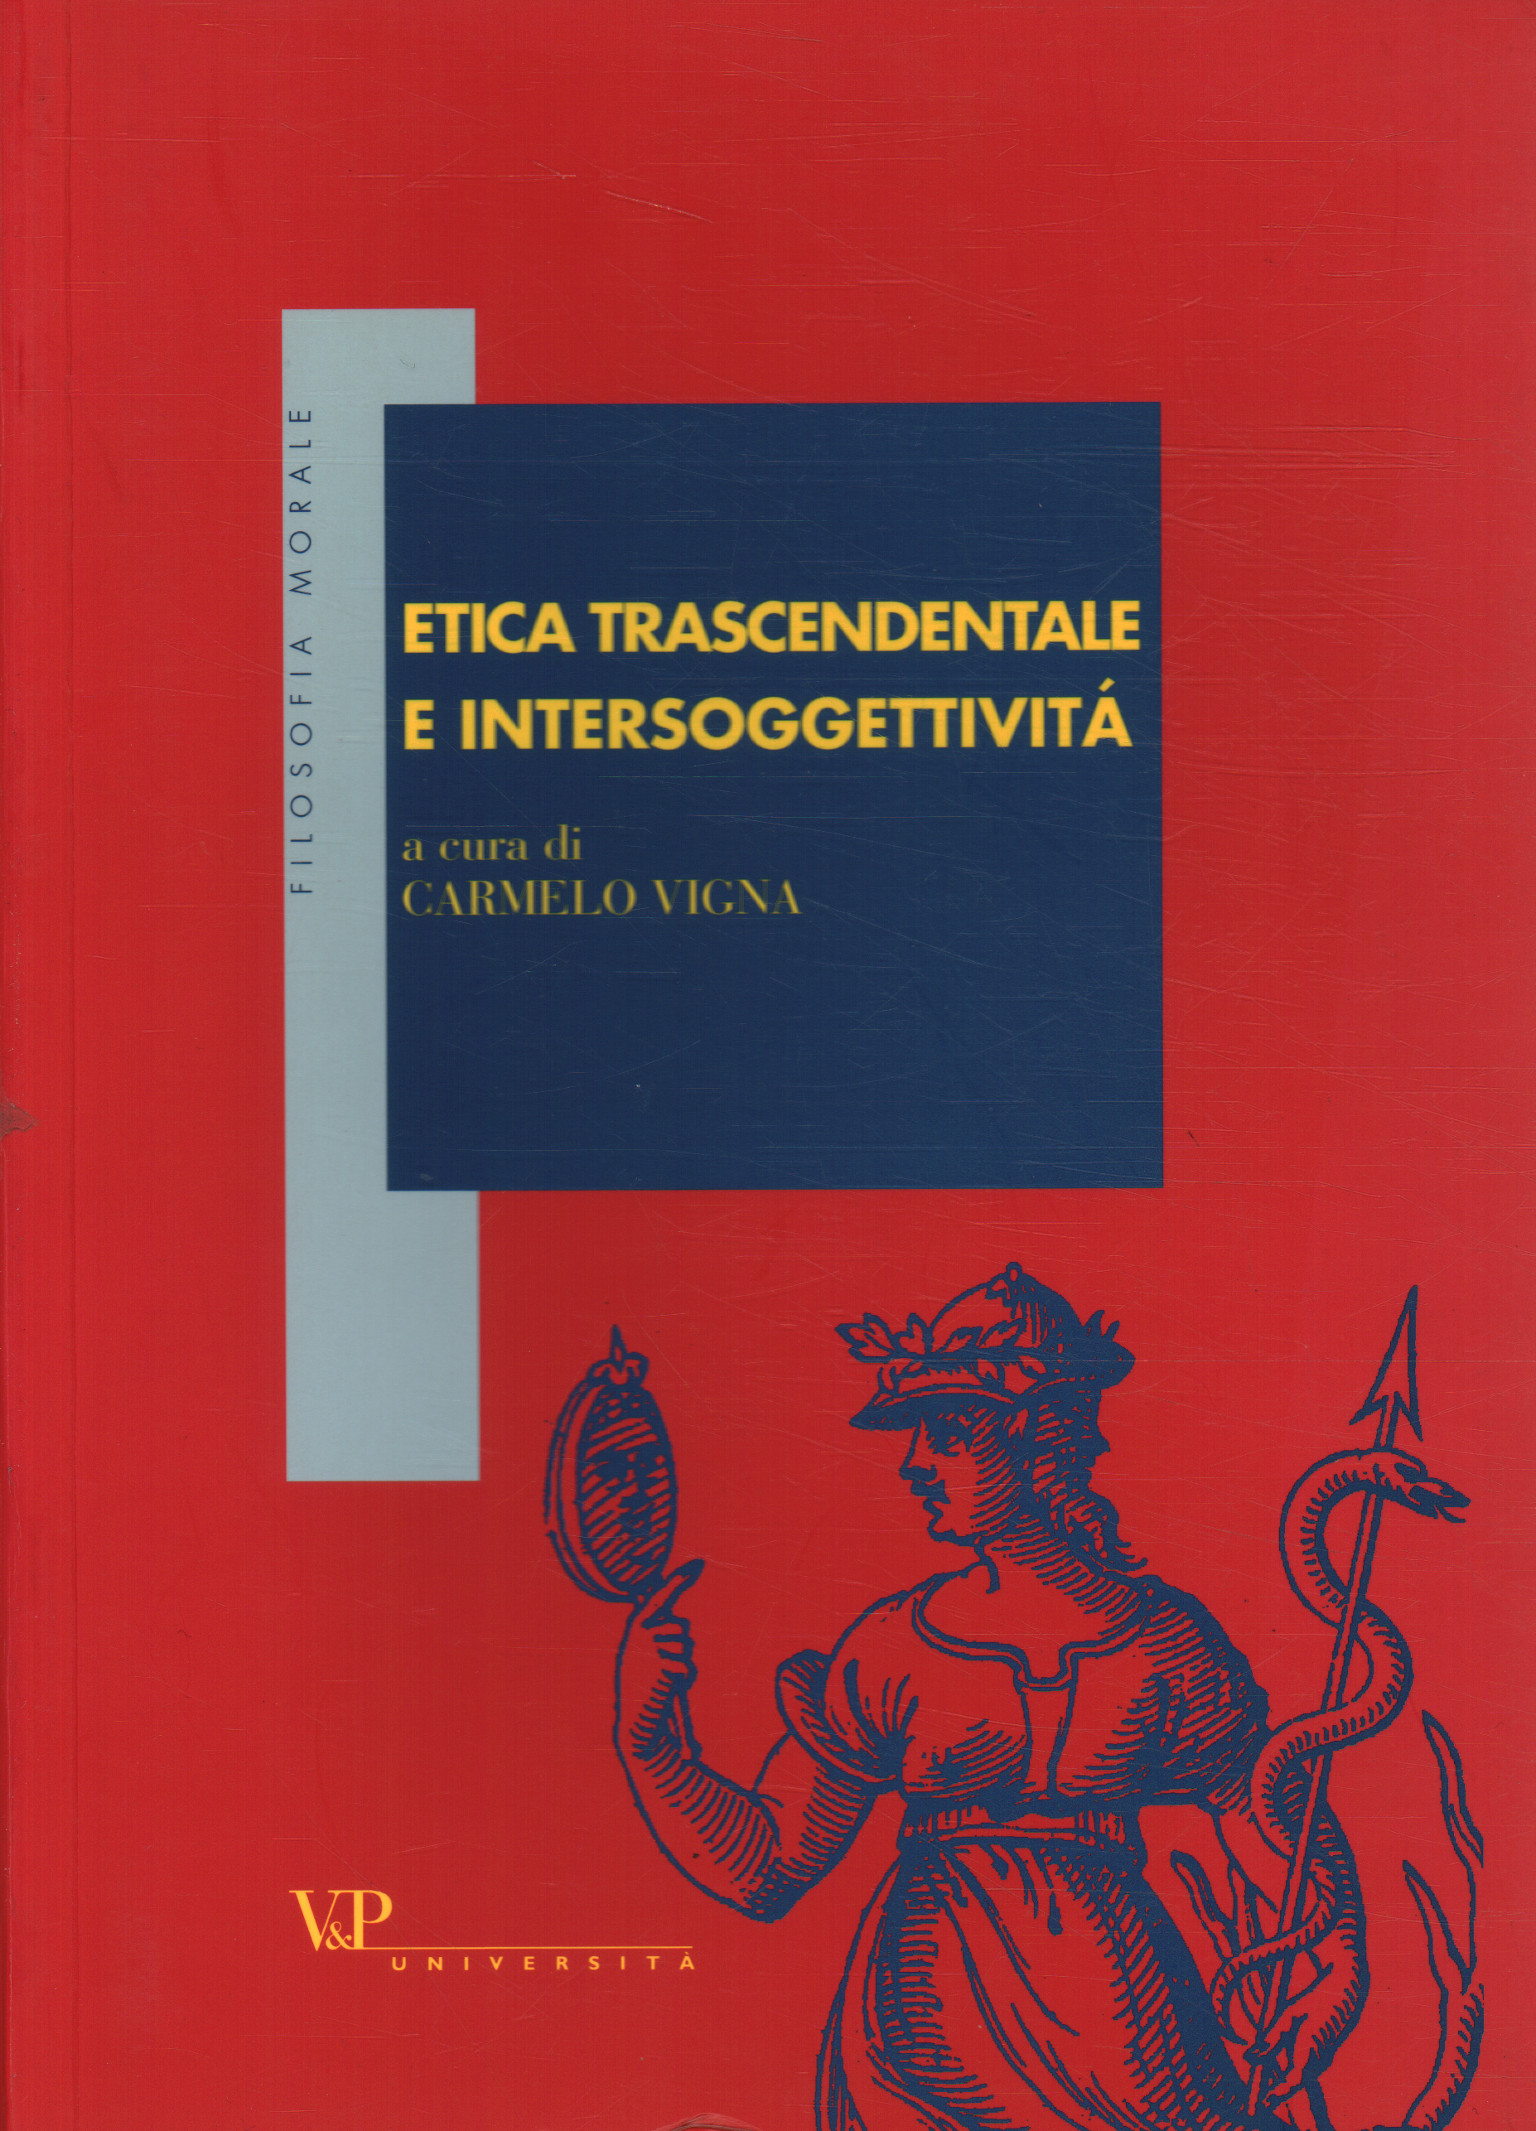 Transcendental ethics and intersubjectivity, Transcendental ethics and intersubjectivity